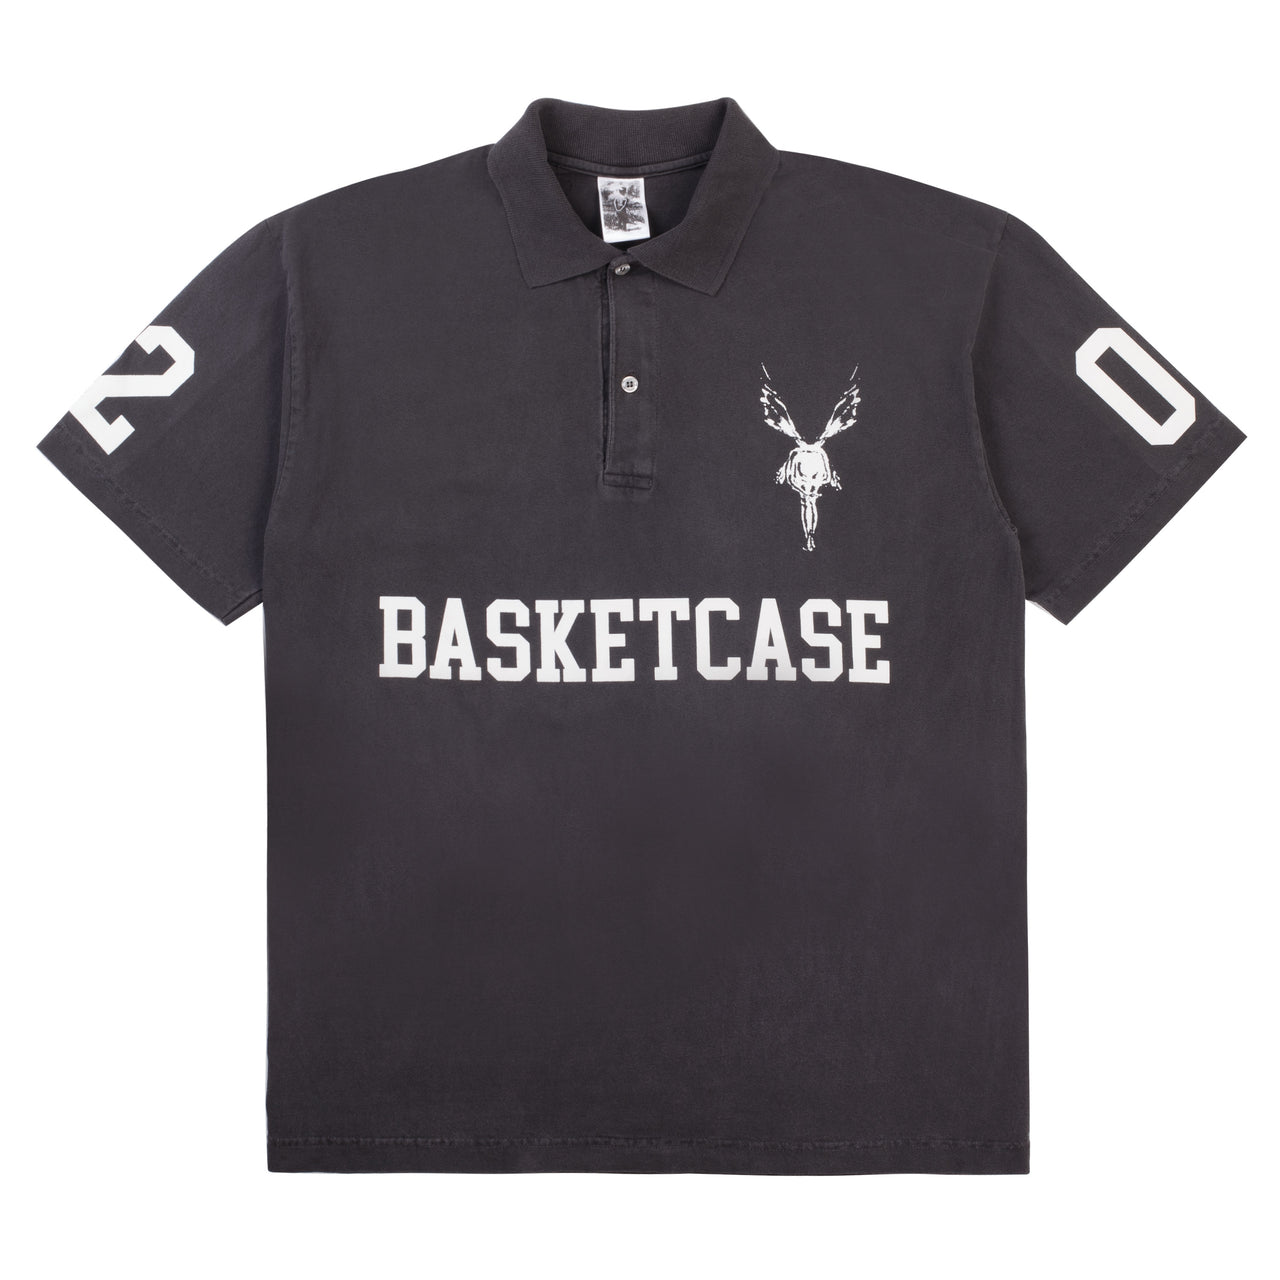 Basketcase Gallery Athletica Polo Black